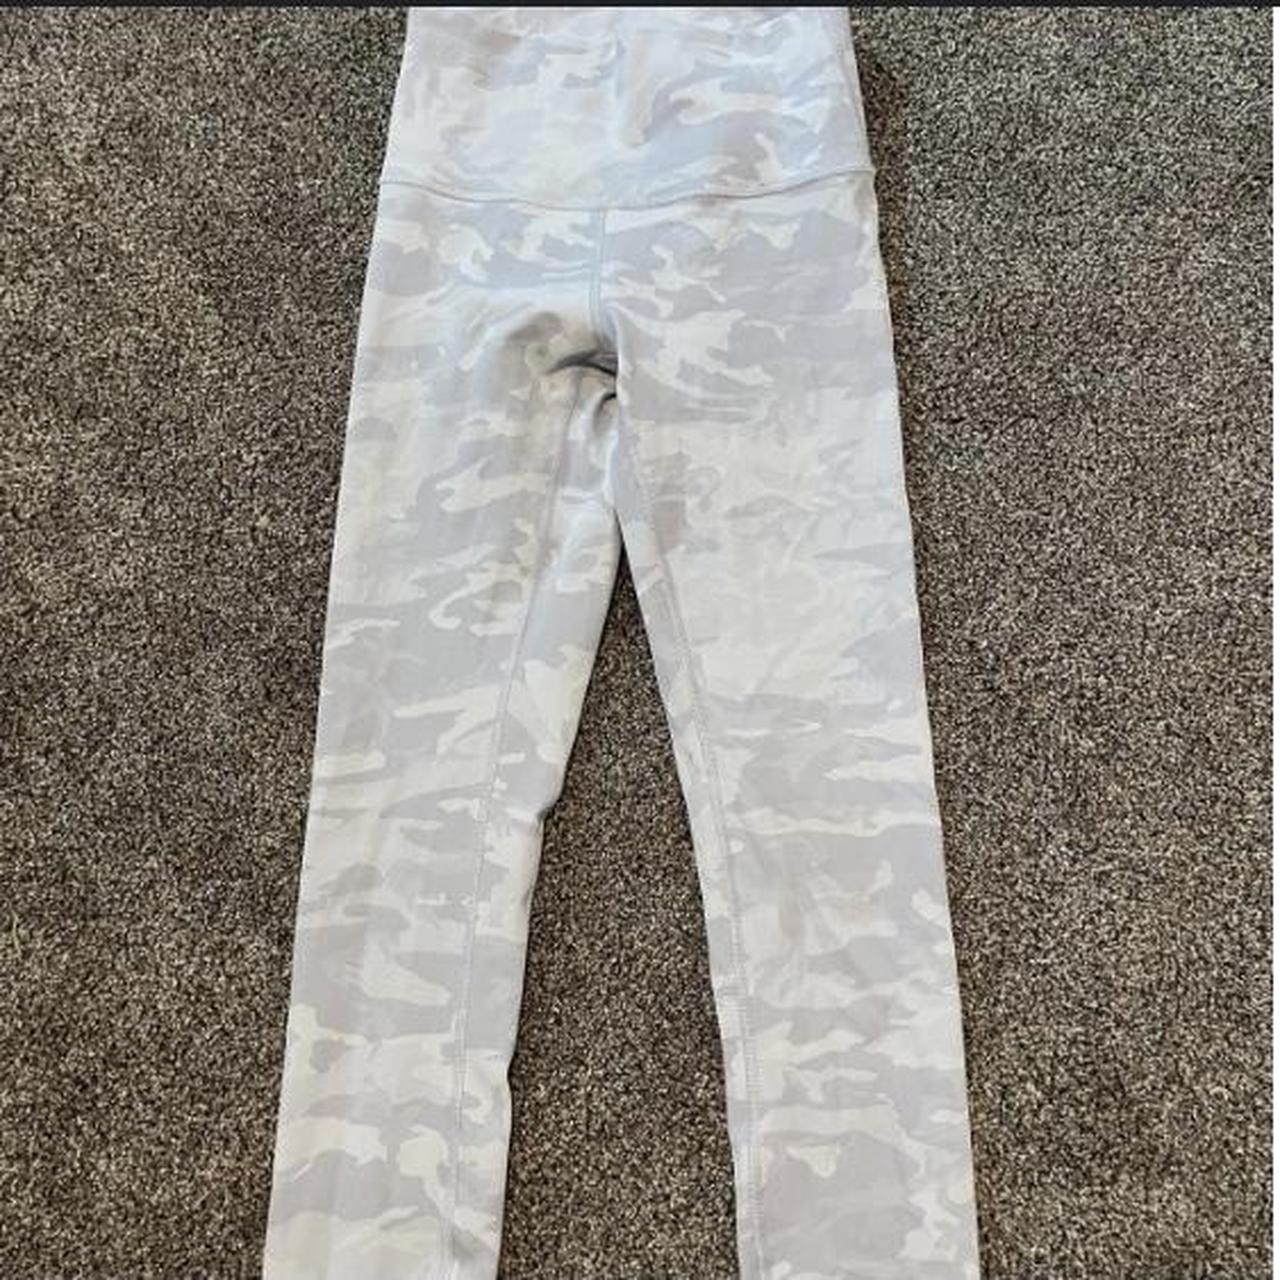 white camo lululemon leggings,worn twice no